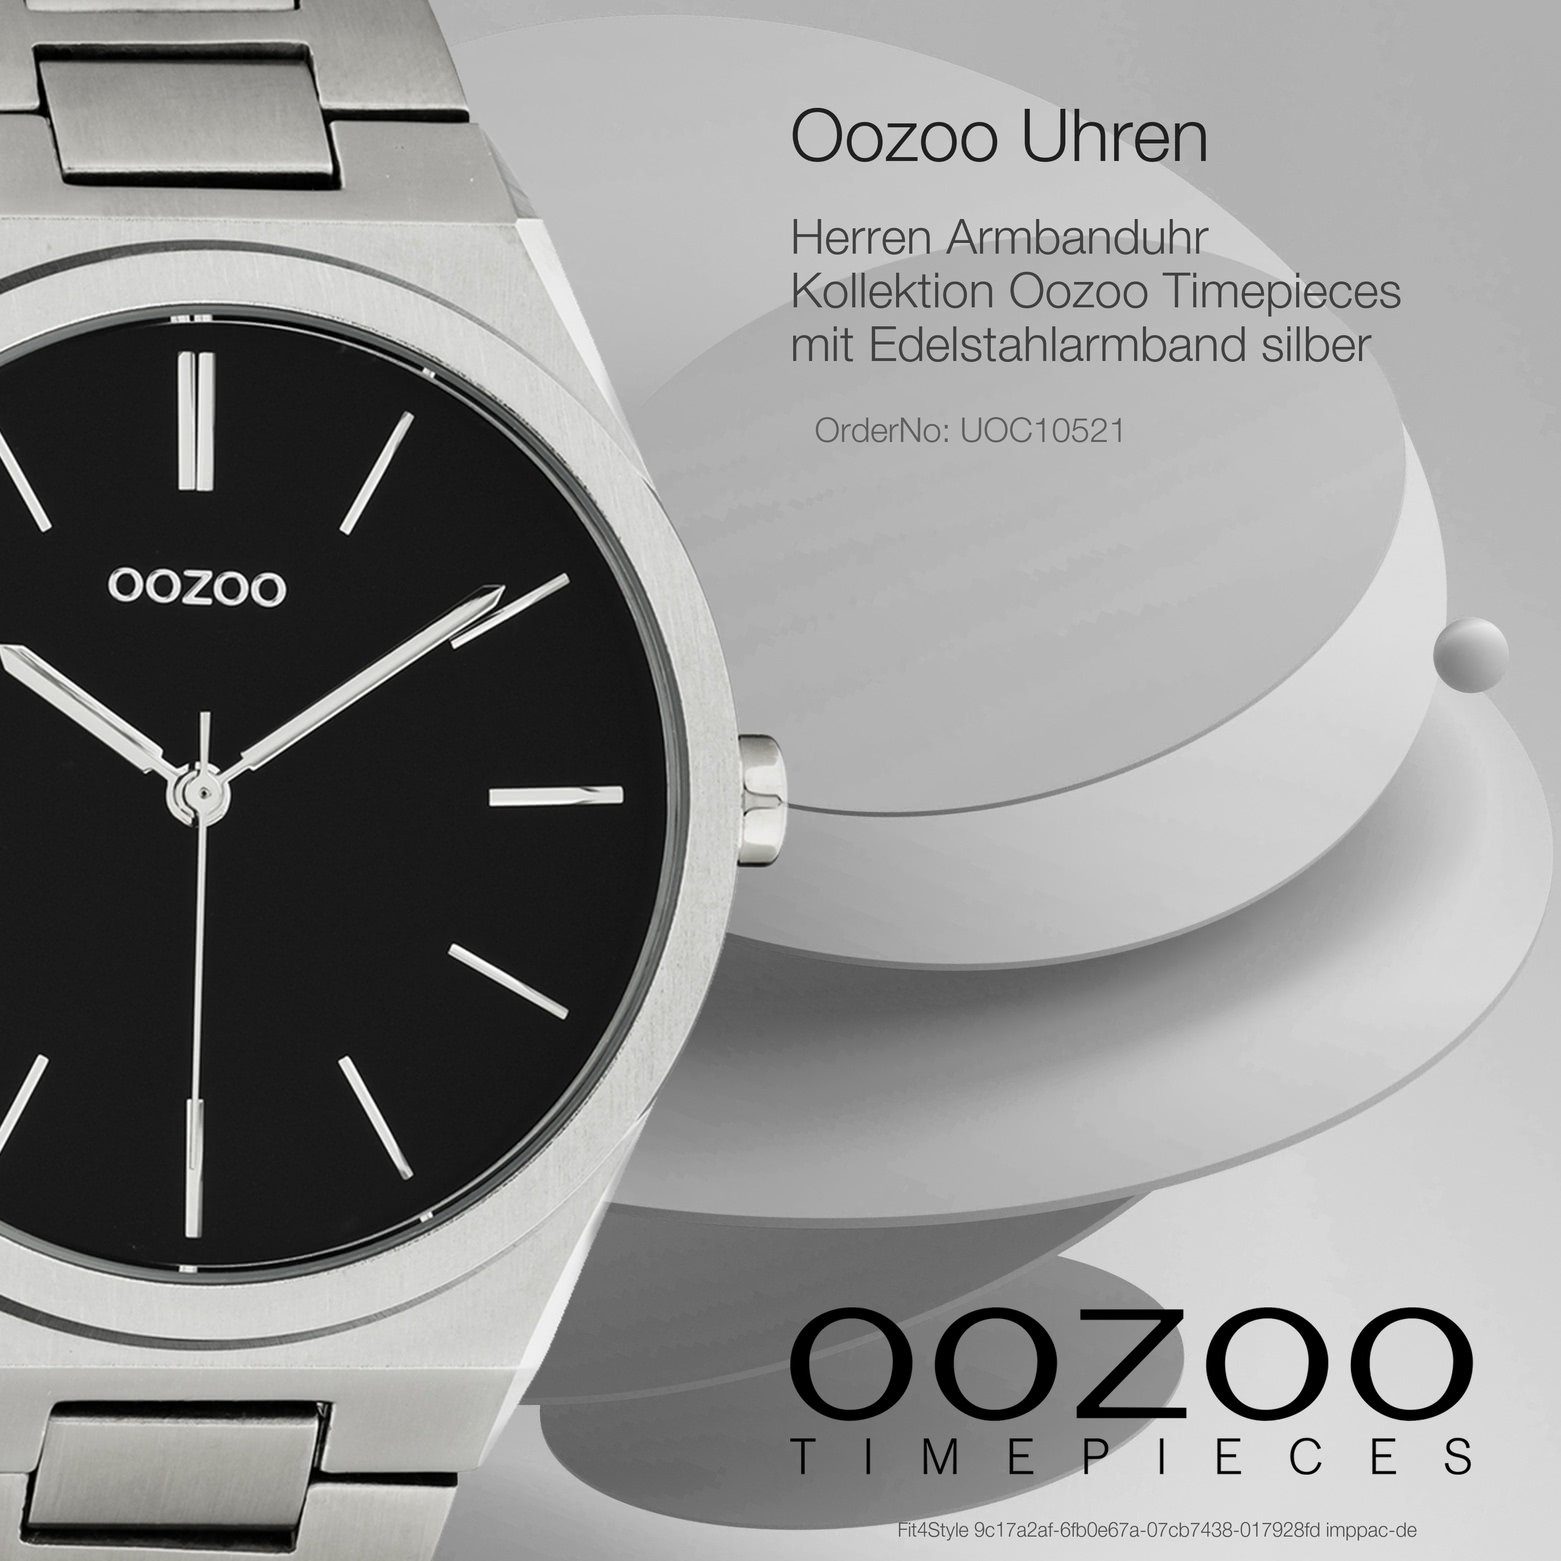 OOZOO rund, Oozoo Quarzuhr Unisex groß Herren, Analog, Armbanduhr 40mm) Fashion-Style silber Edelstahlarmband, Damenuhr (ca.